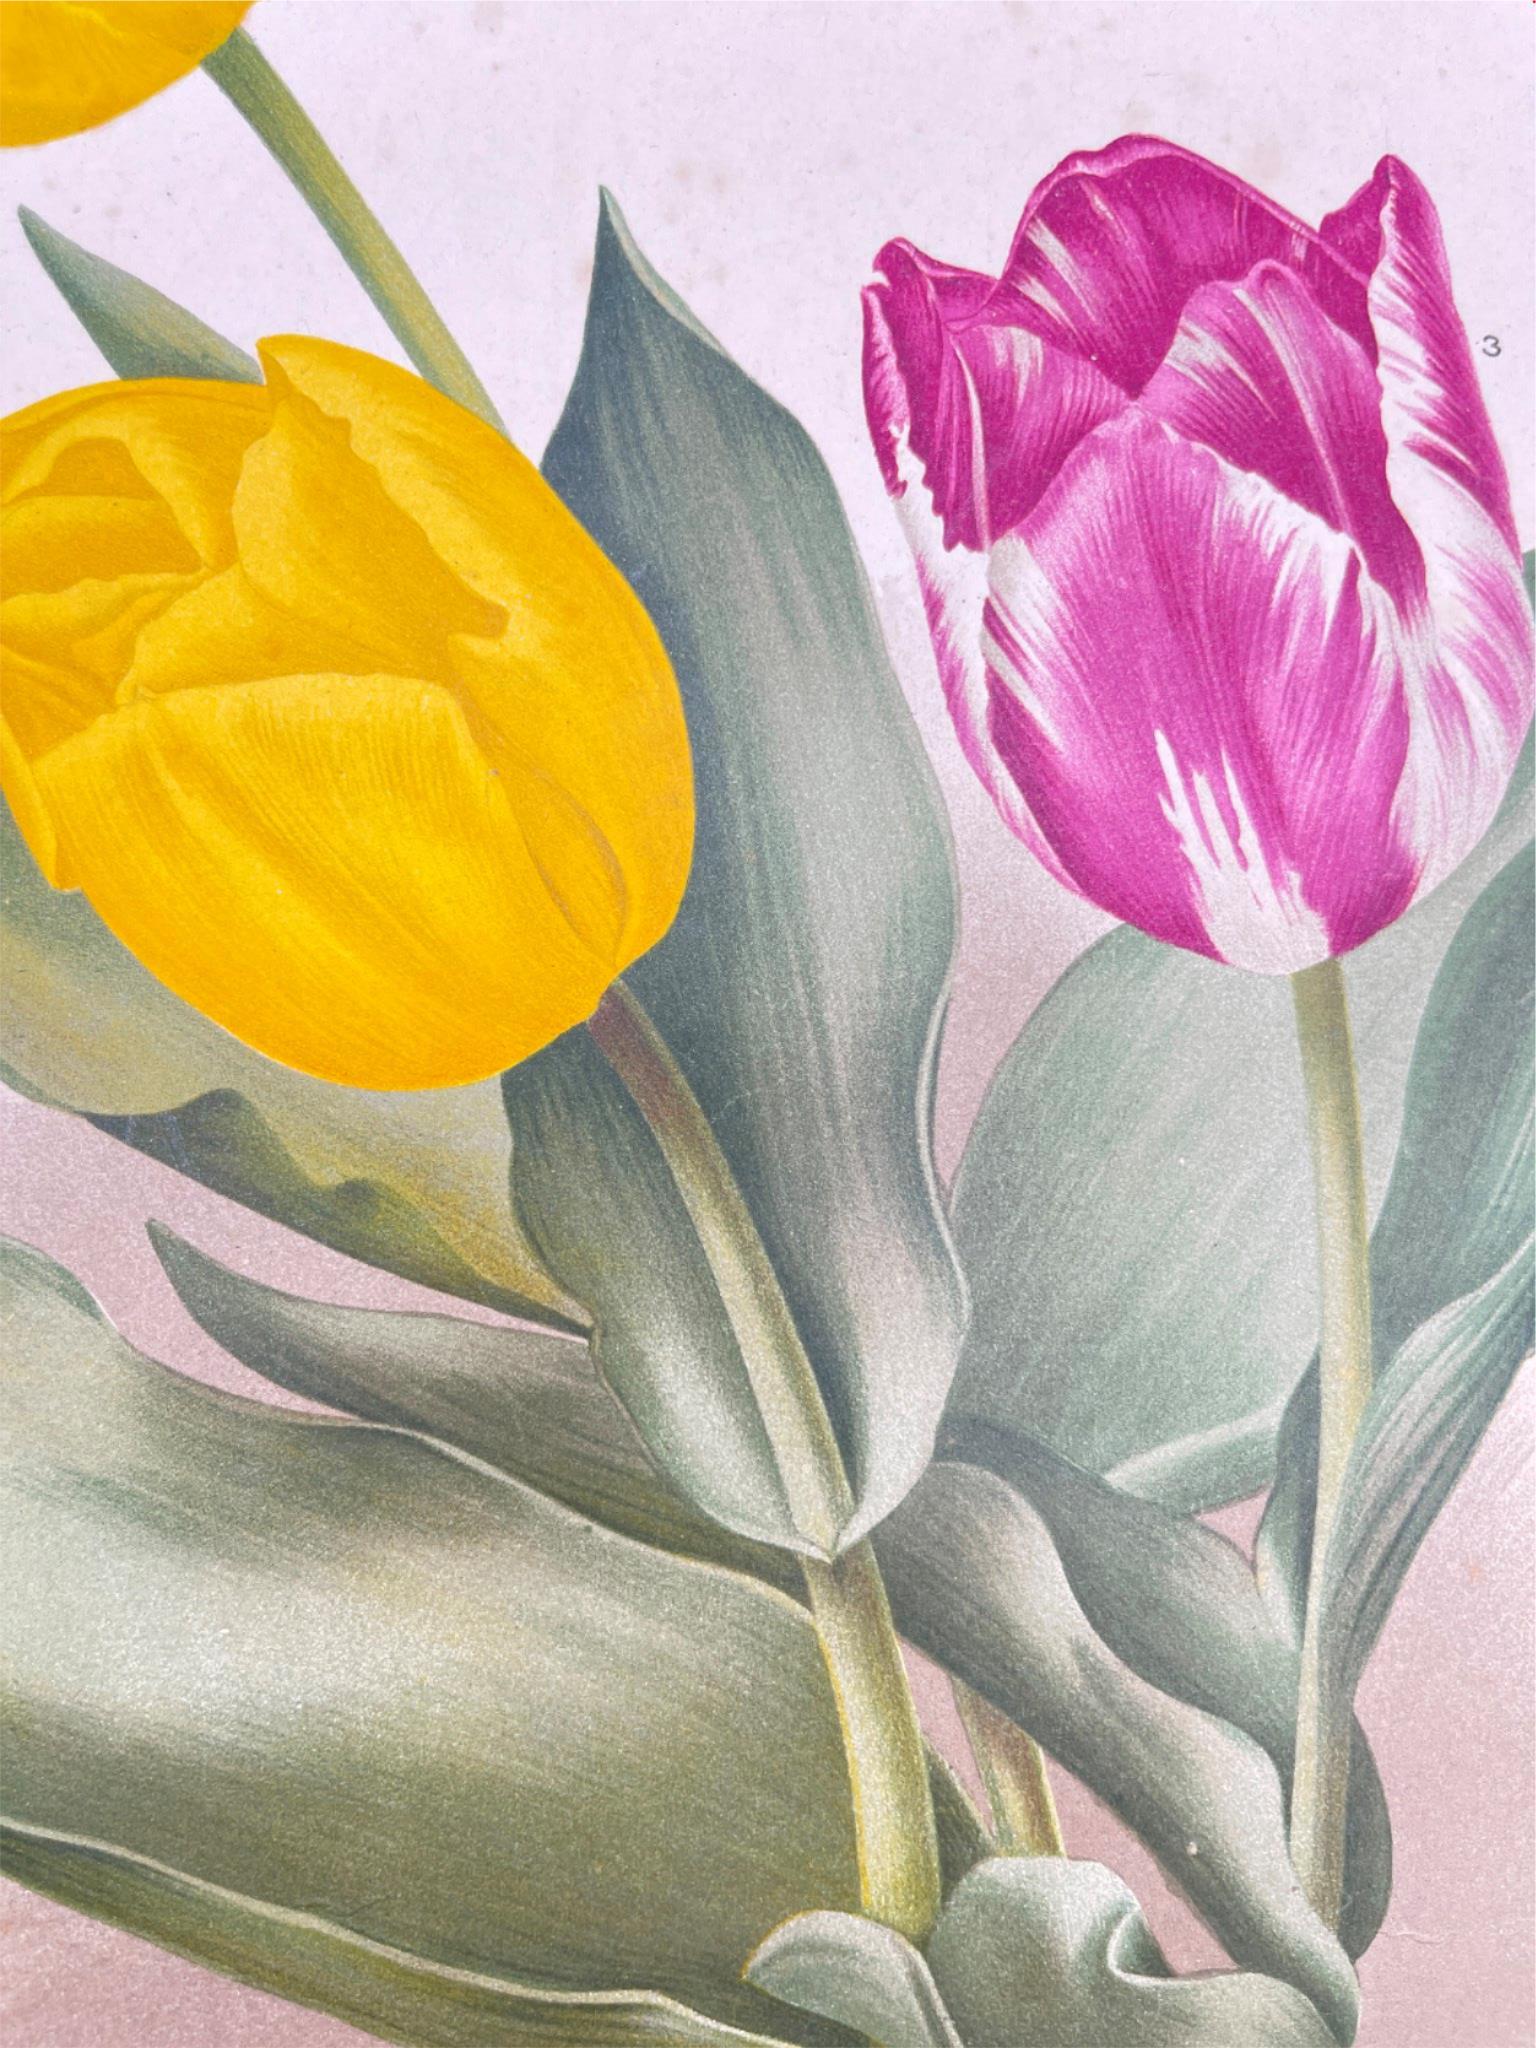 Antique Botanical Print - Flower Art - Florilegium Harlemense - Goffart - Dahlströms Fine Art